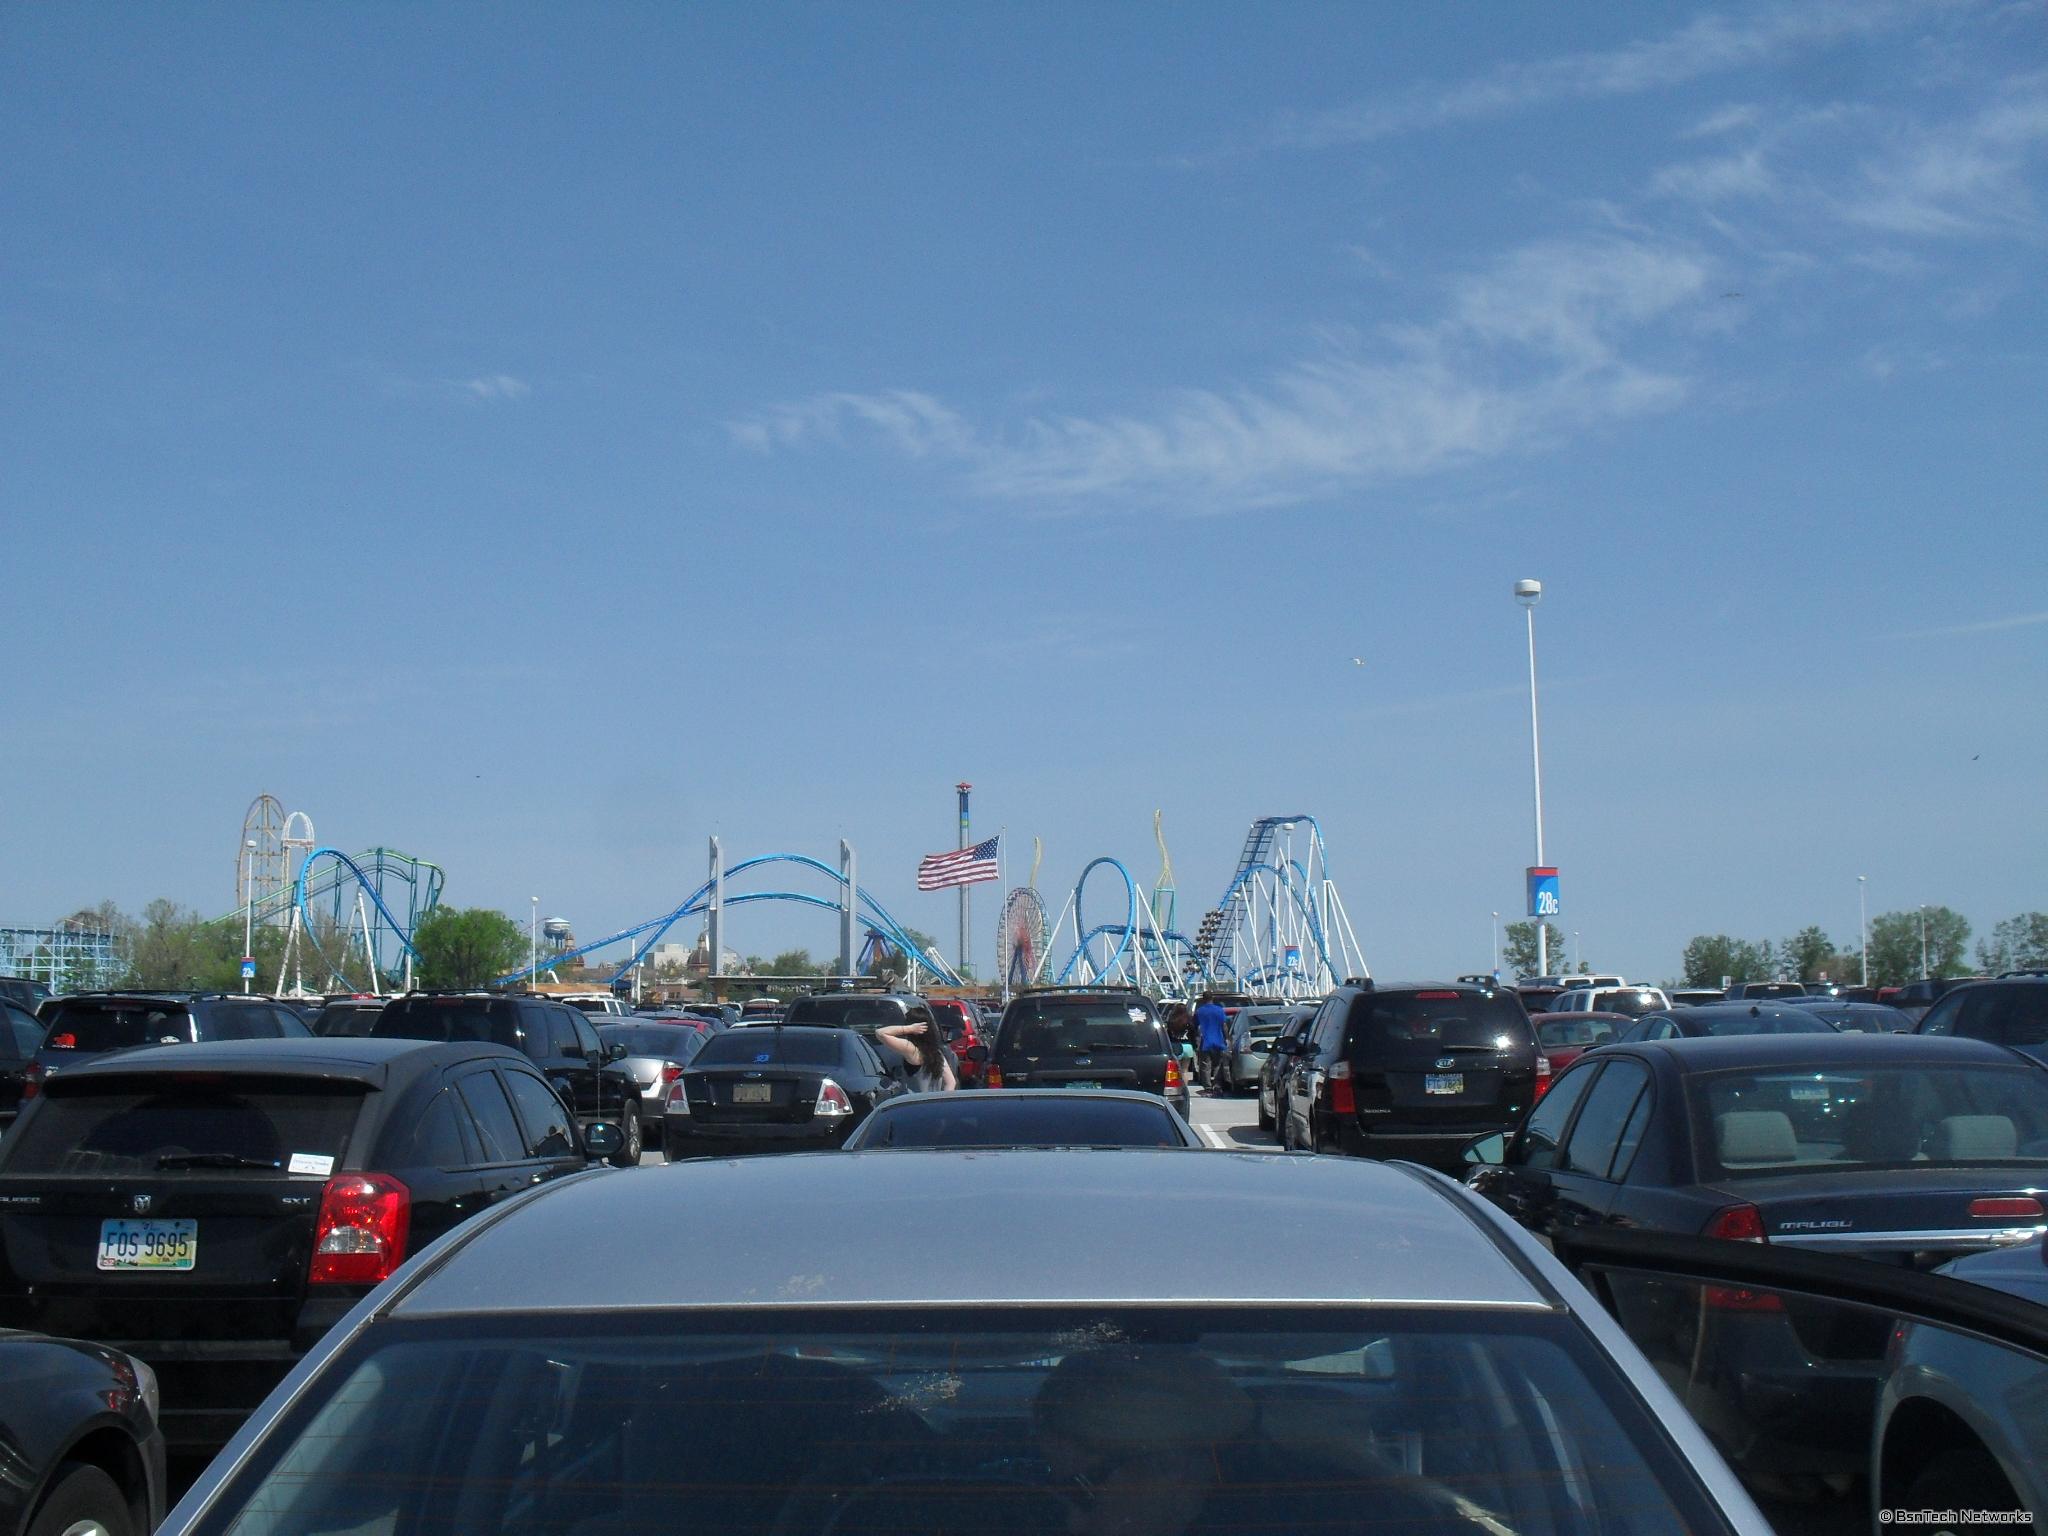 Cedar Point Entrance / Parking Lot